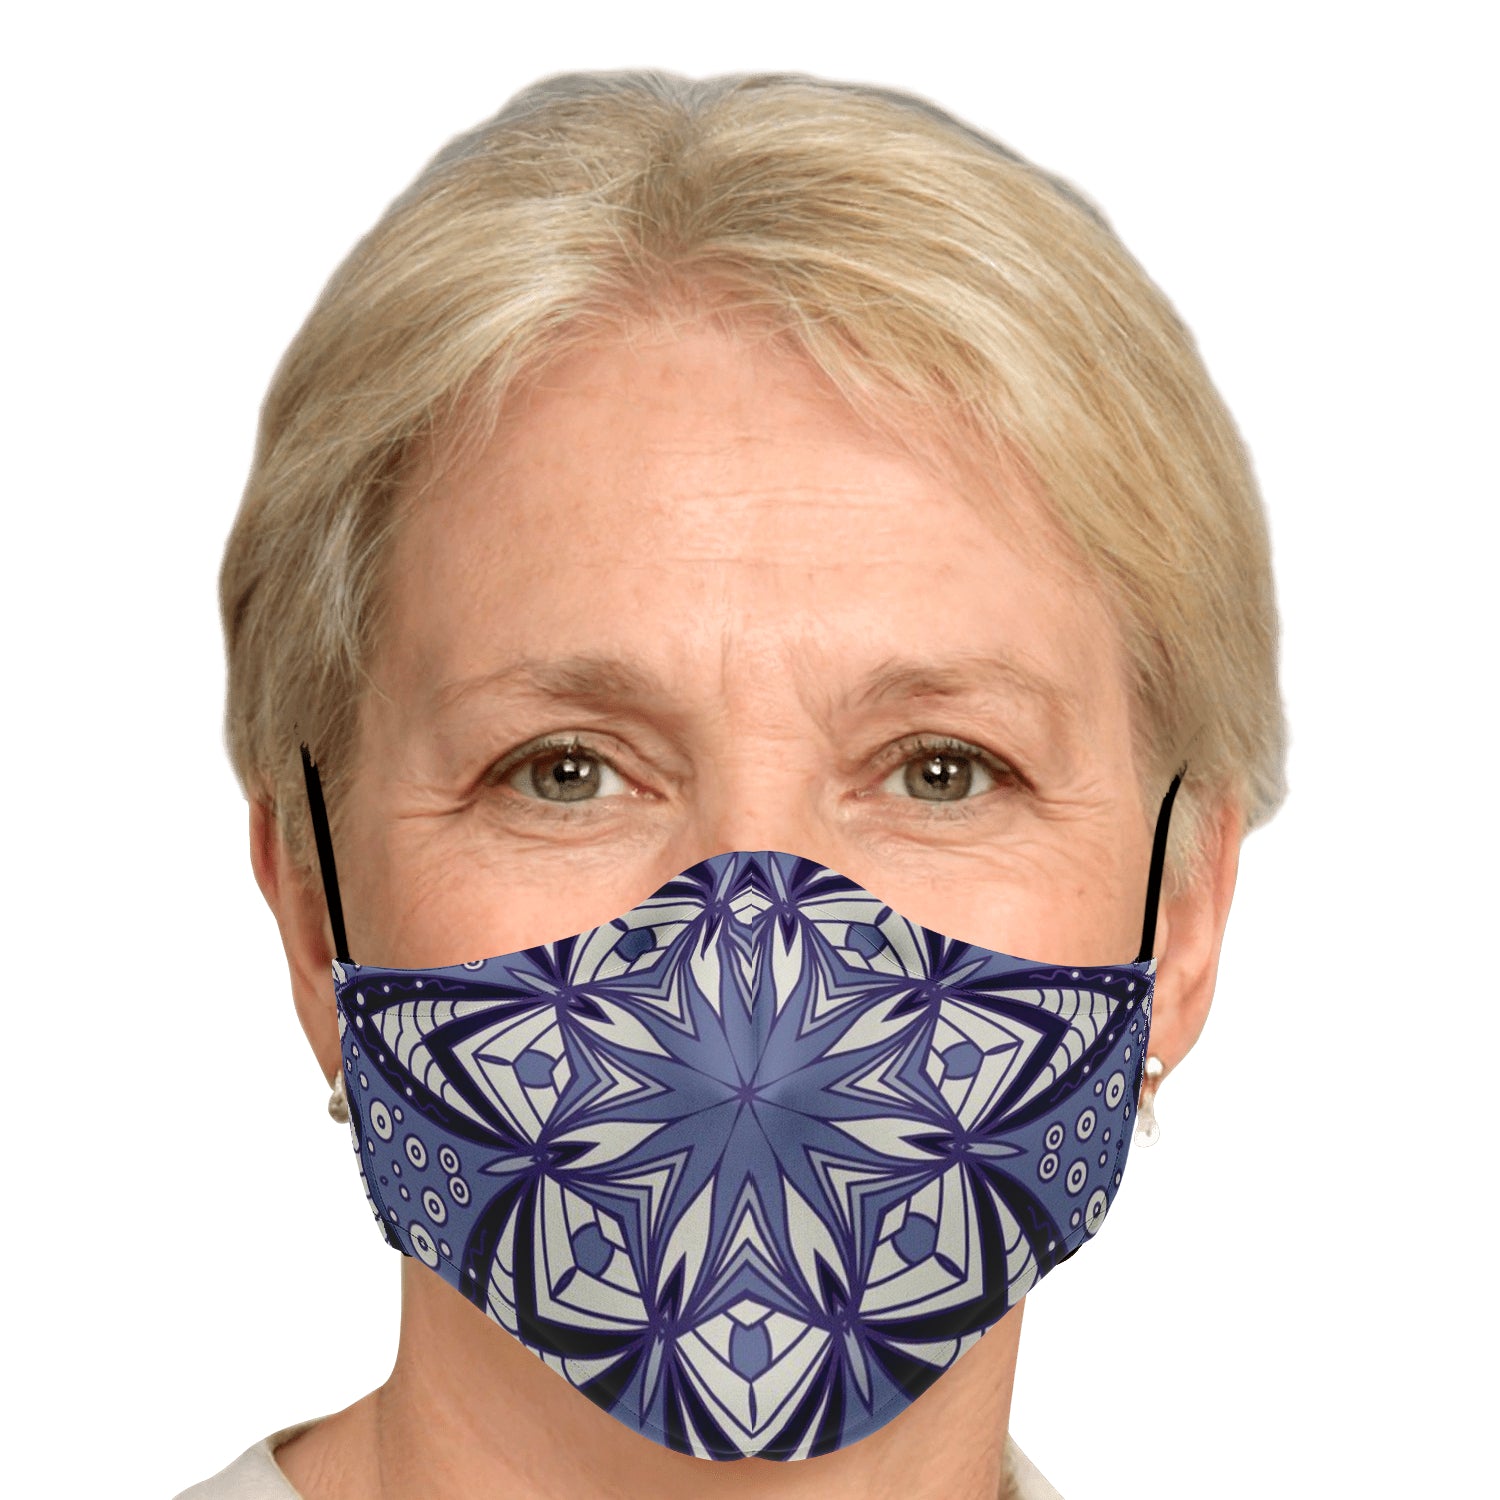 Blue Mandala Face Mask With Filters - Mind Gone